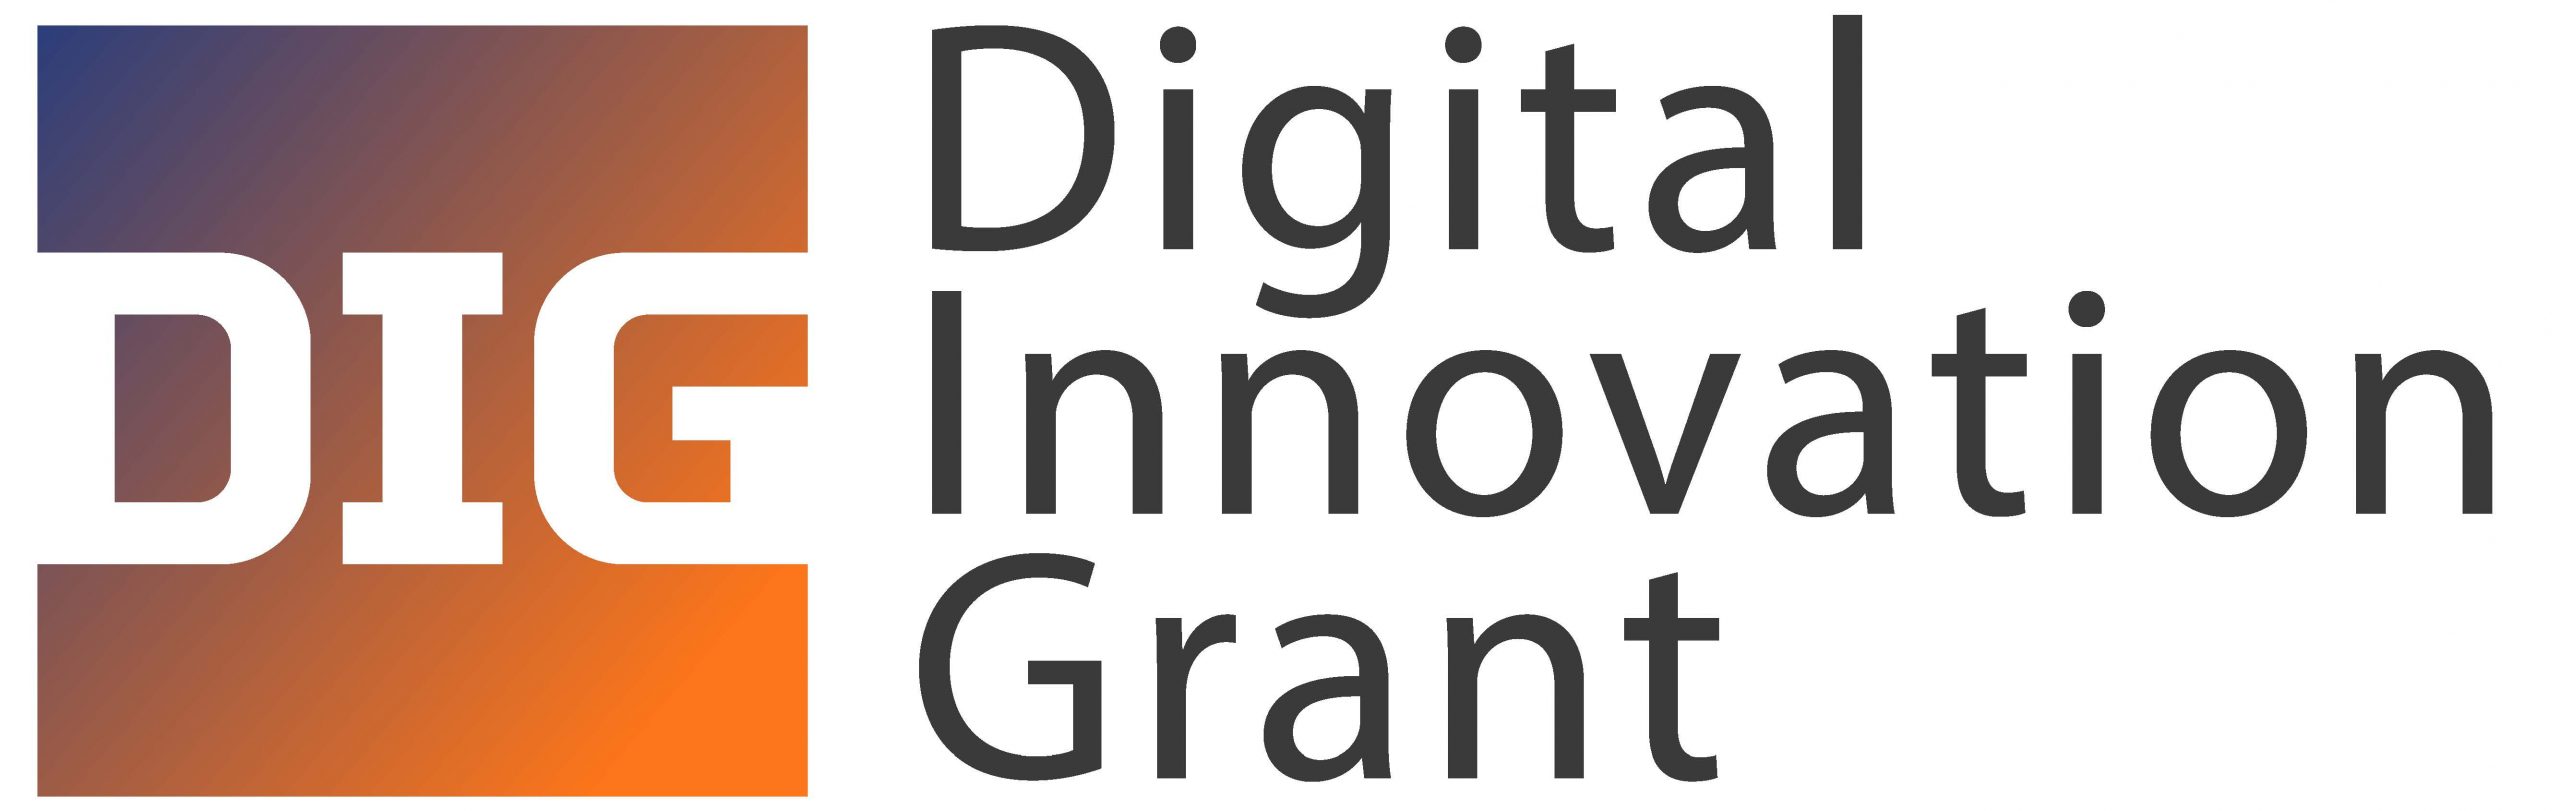 Digital Innovation Grant scheme re-opens today